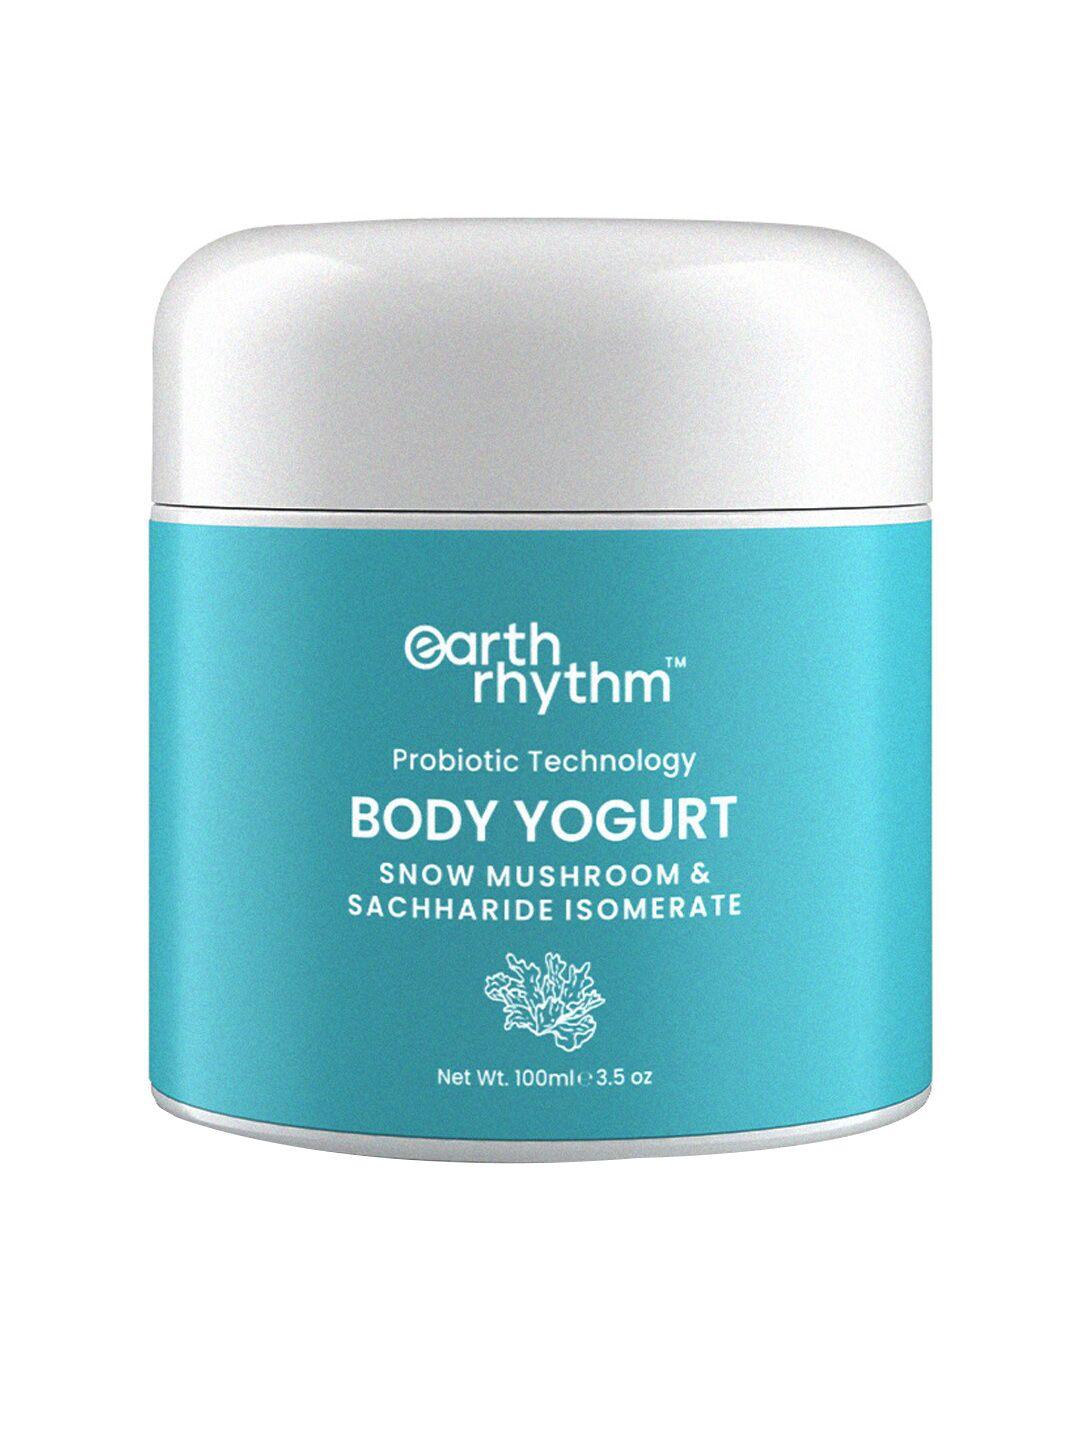 earth rhythm probiotic technology snow mushroom & sachharide isomerate body yogurt - 100ml